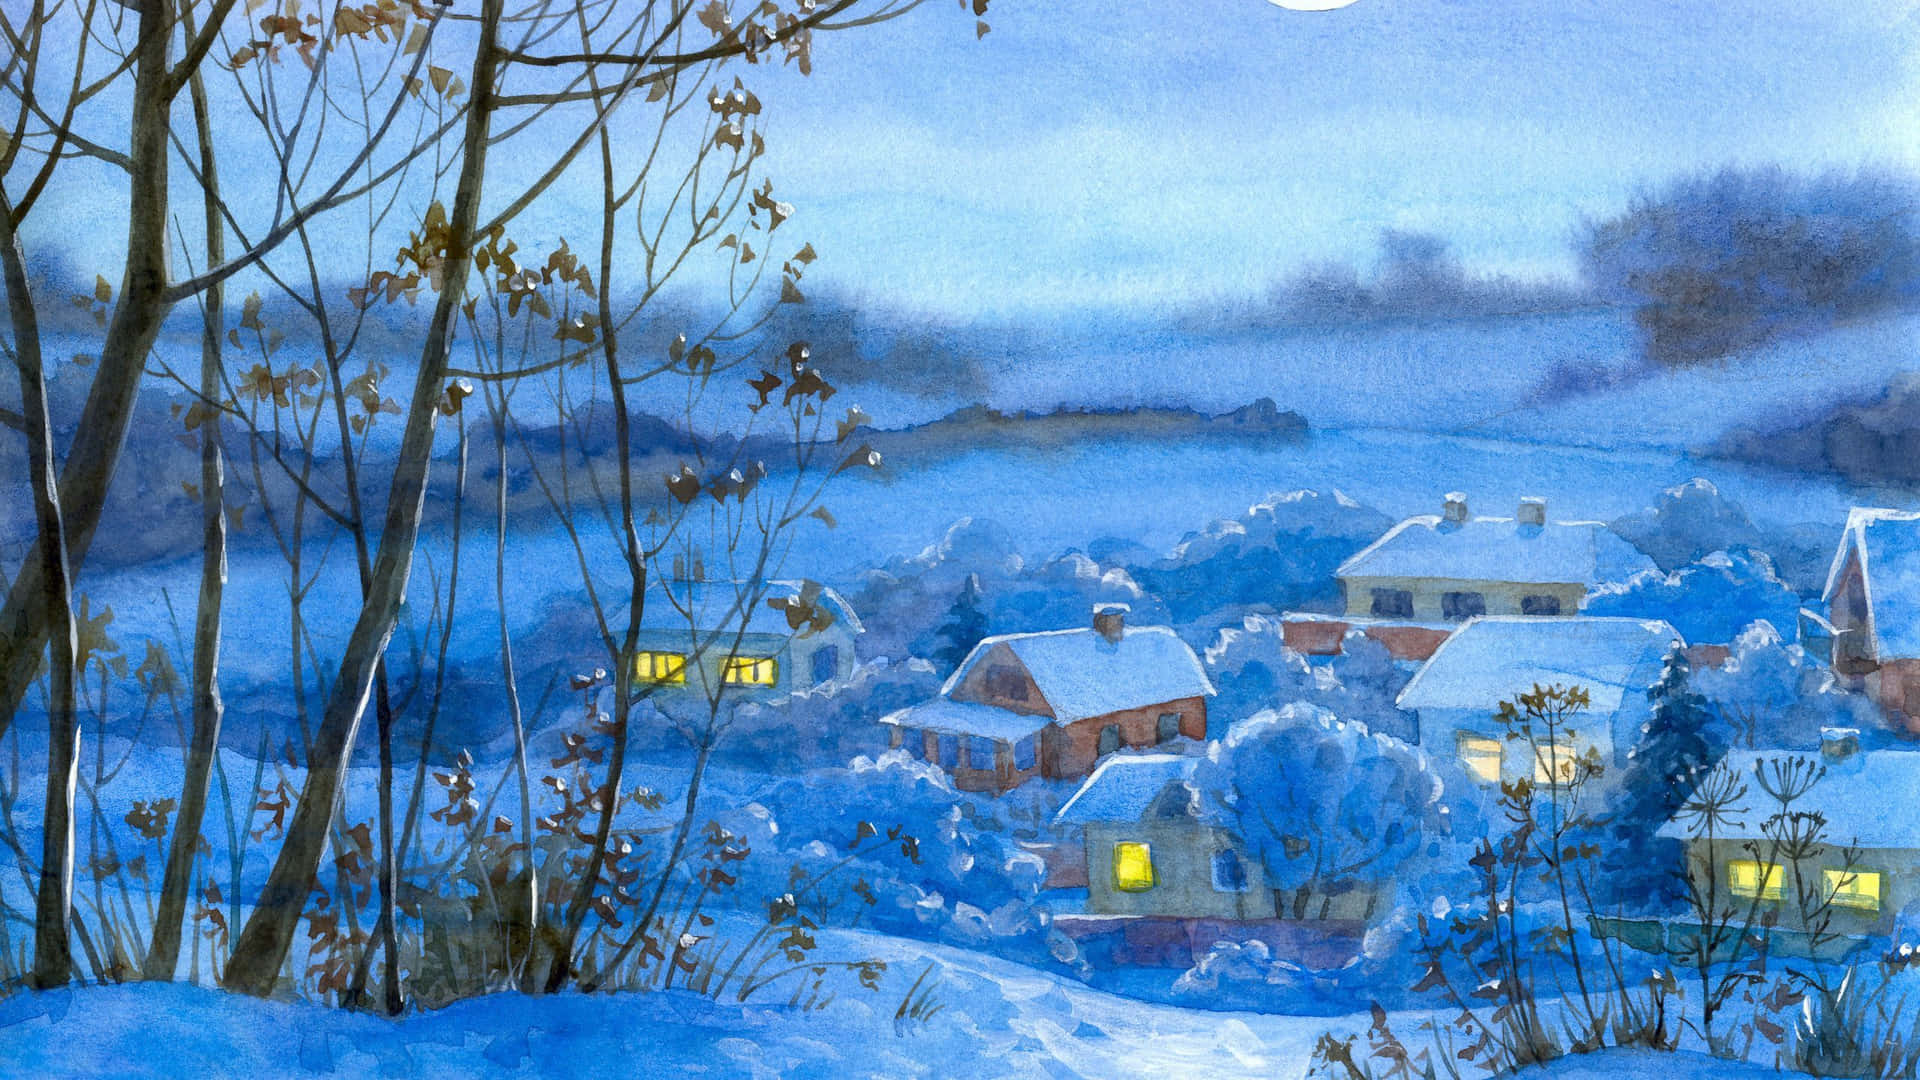 Enchanting Winter Wonderland Painting Wallpaper